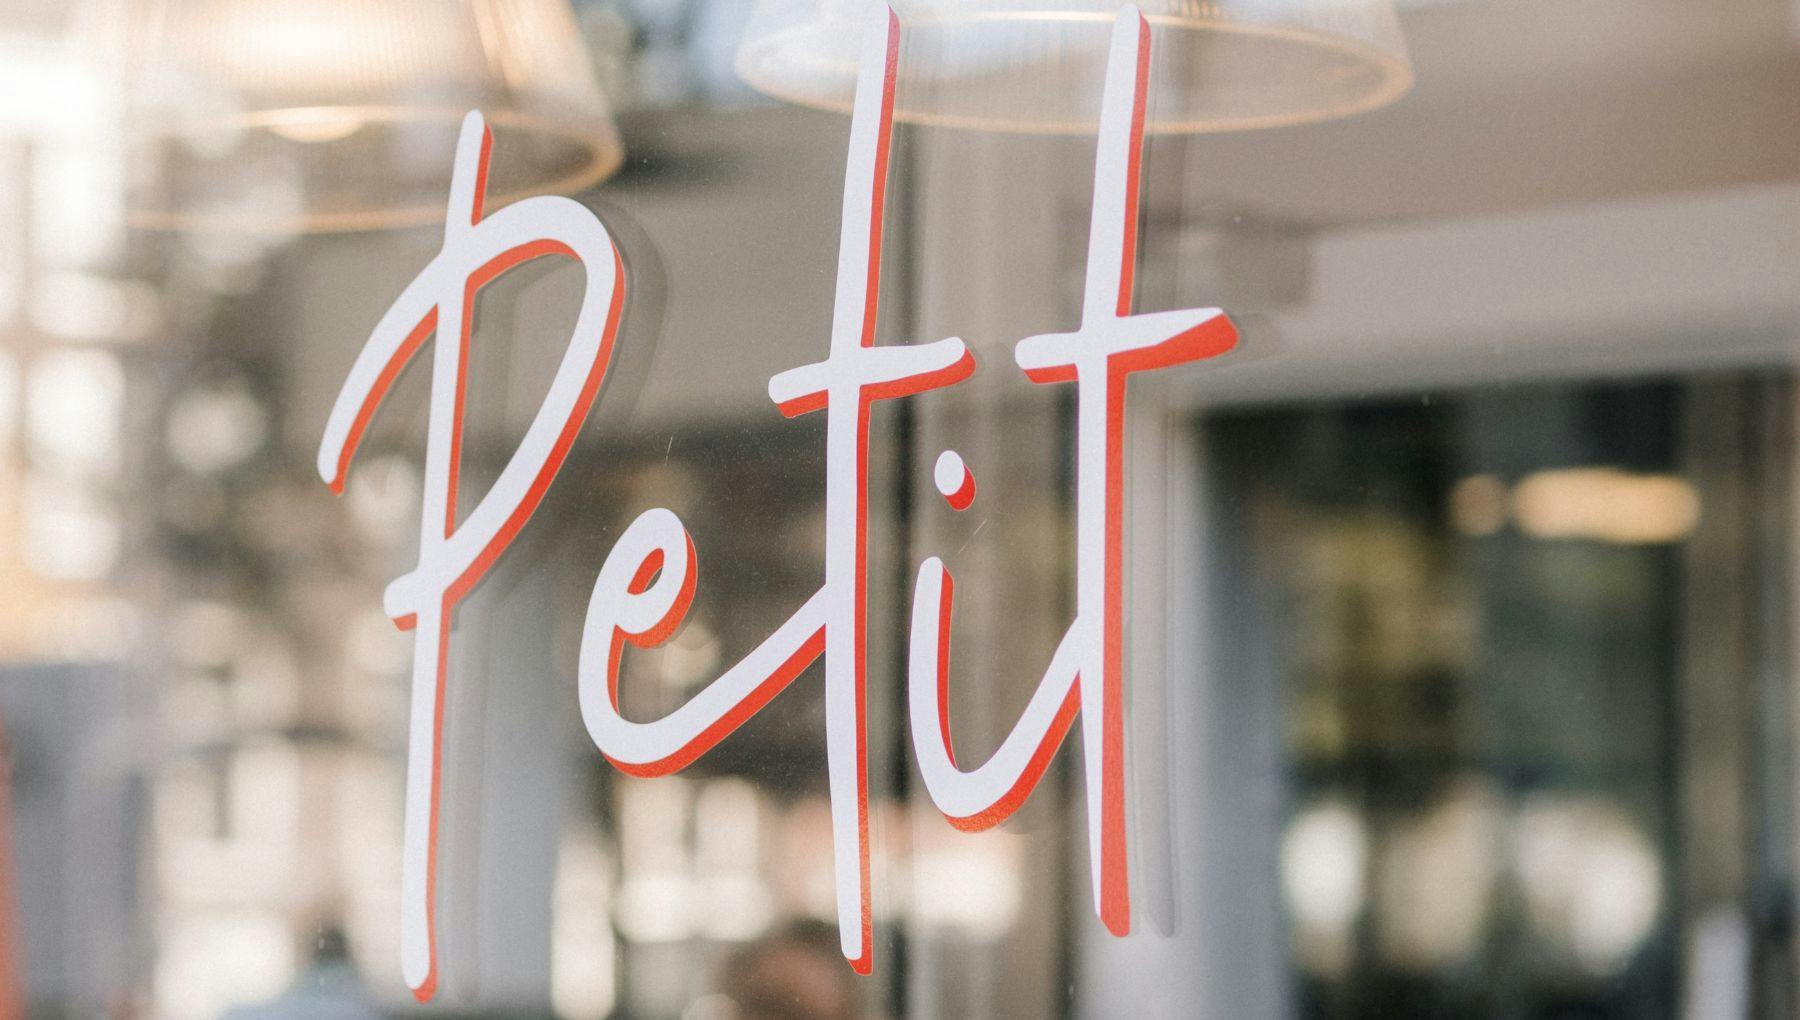 Petit by Sam exterior logo